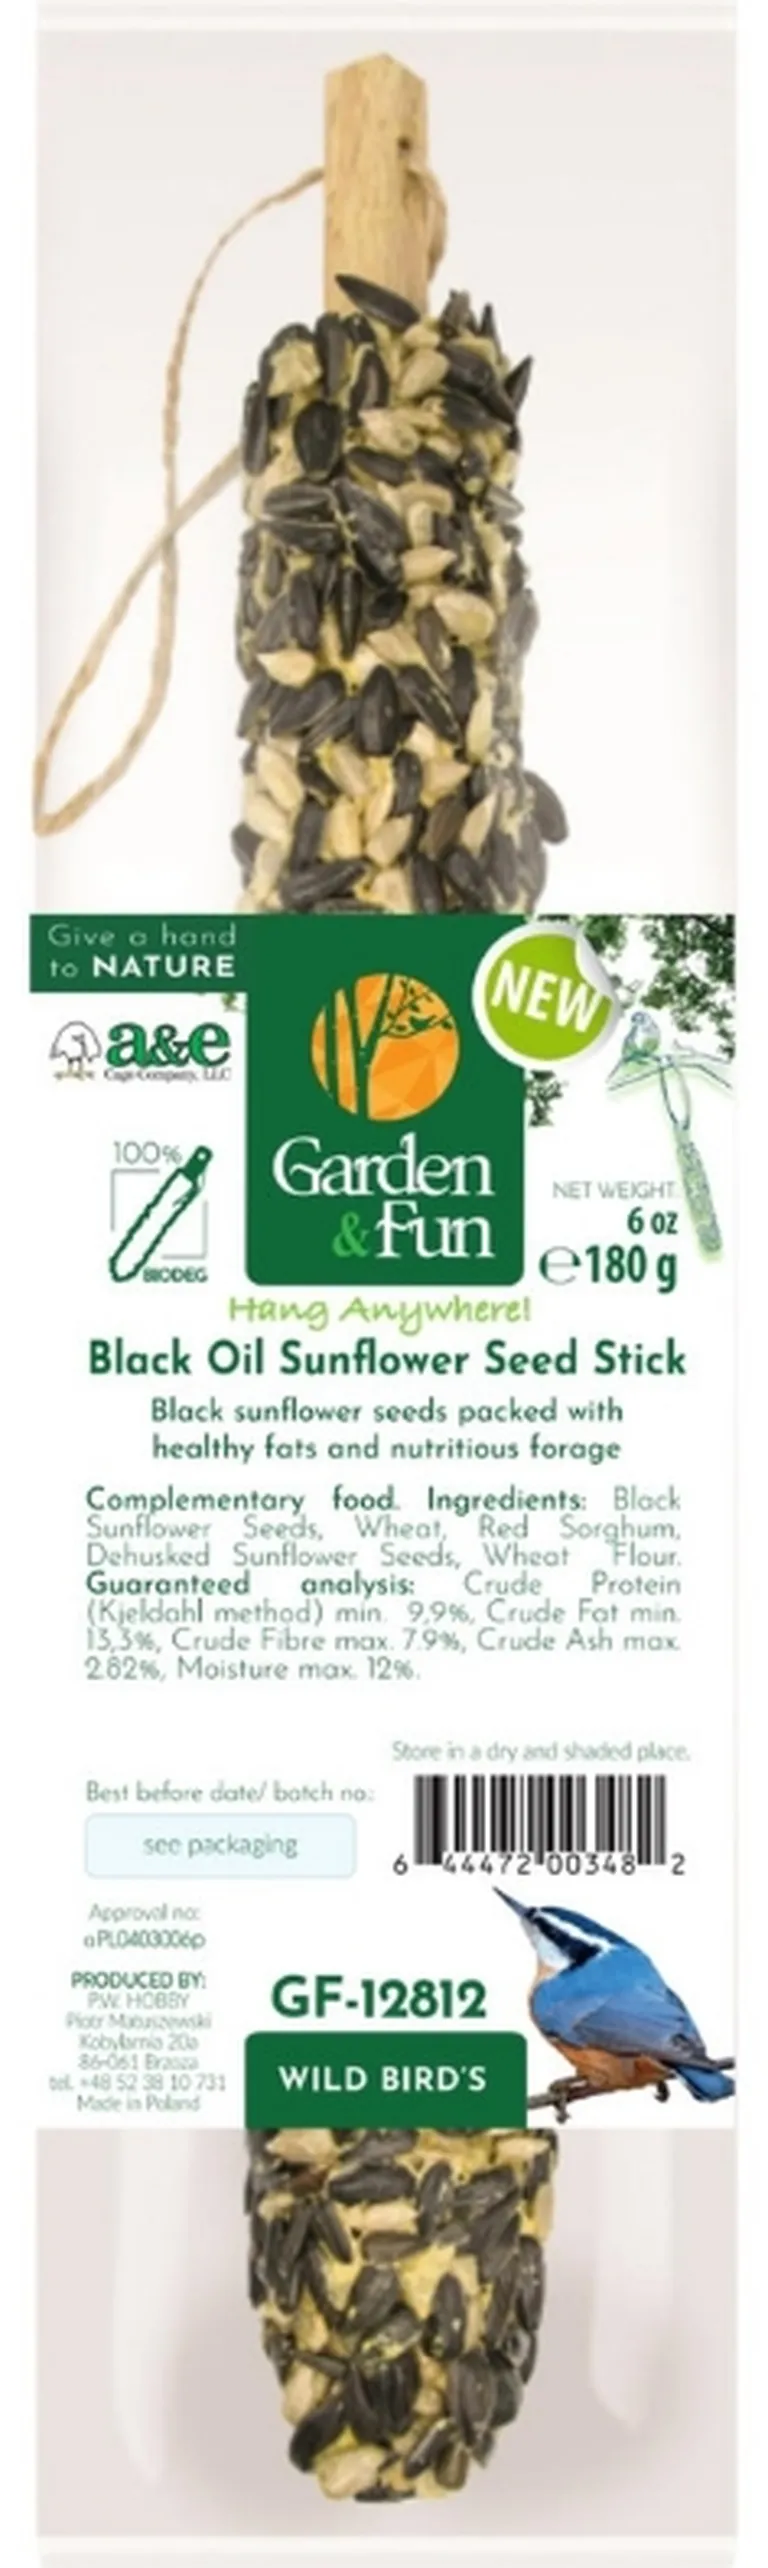 AE Cage Company Garden and Fun Sunflower Treat Stick for Wild Birds Photo 1